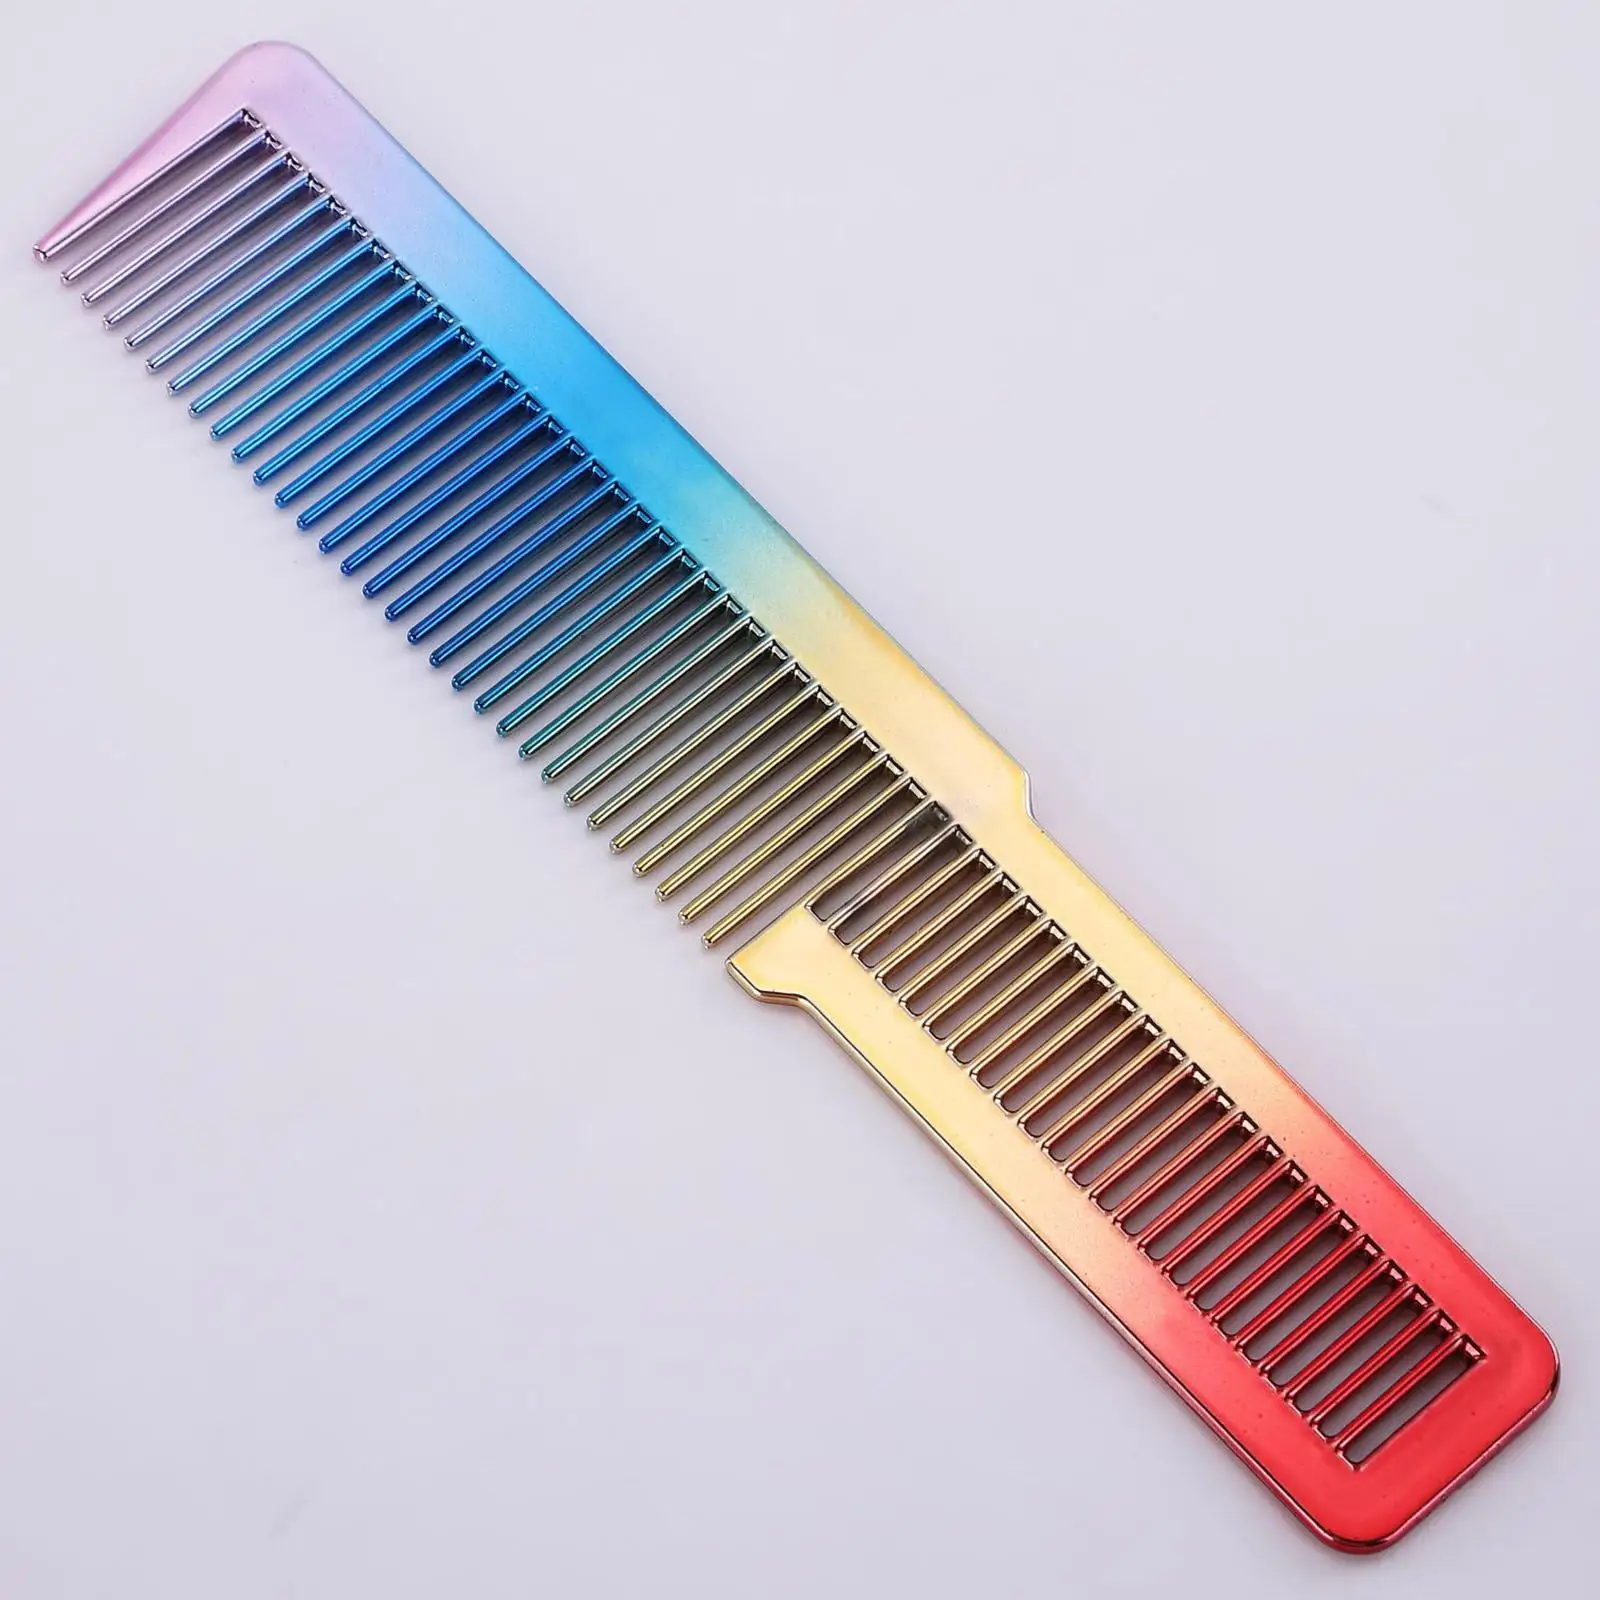 2X Hair Cutting Comb hair Hairdressing Stylist Barbers Salon Flat Top